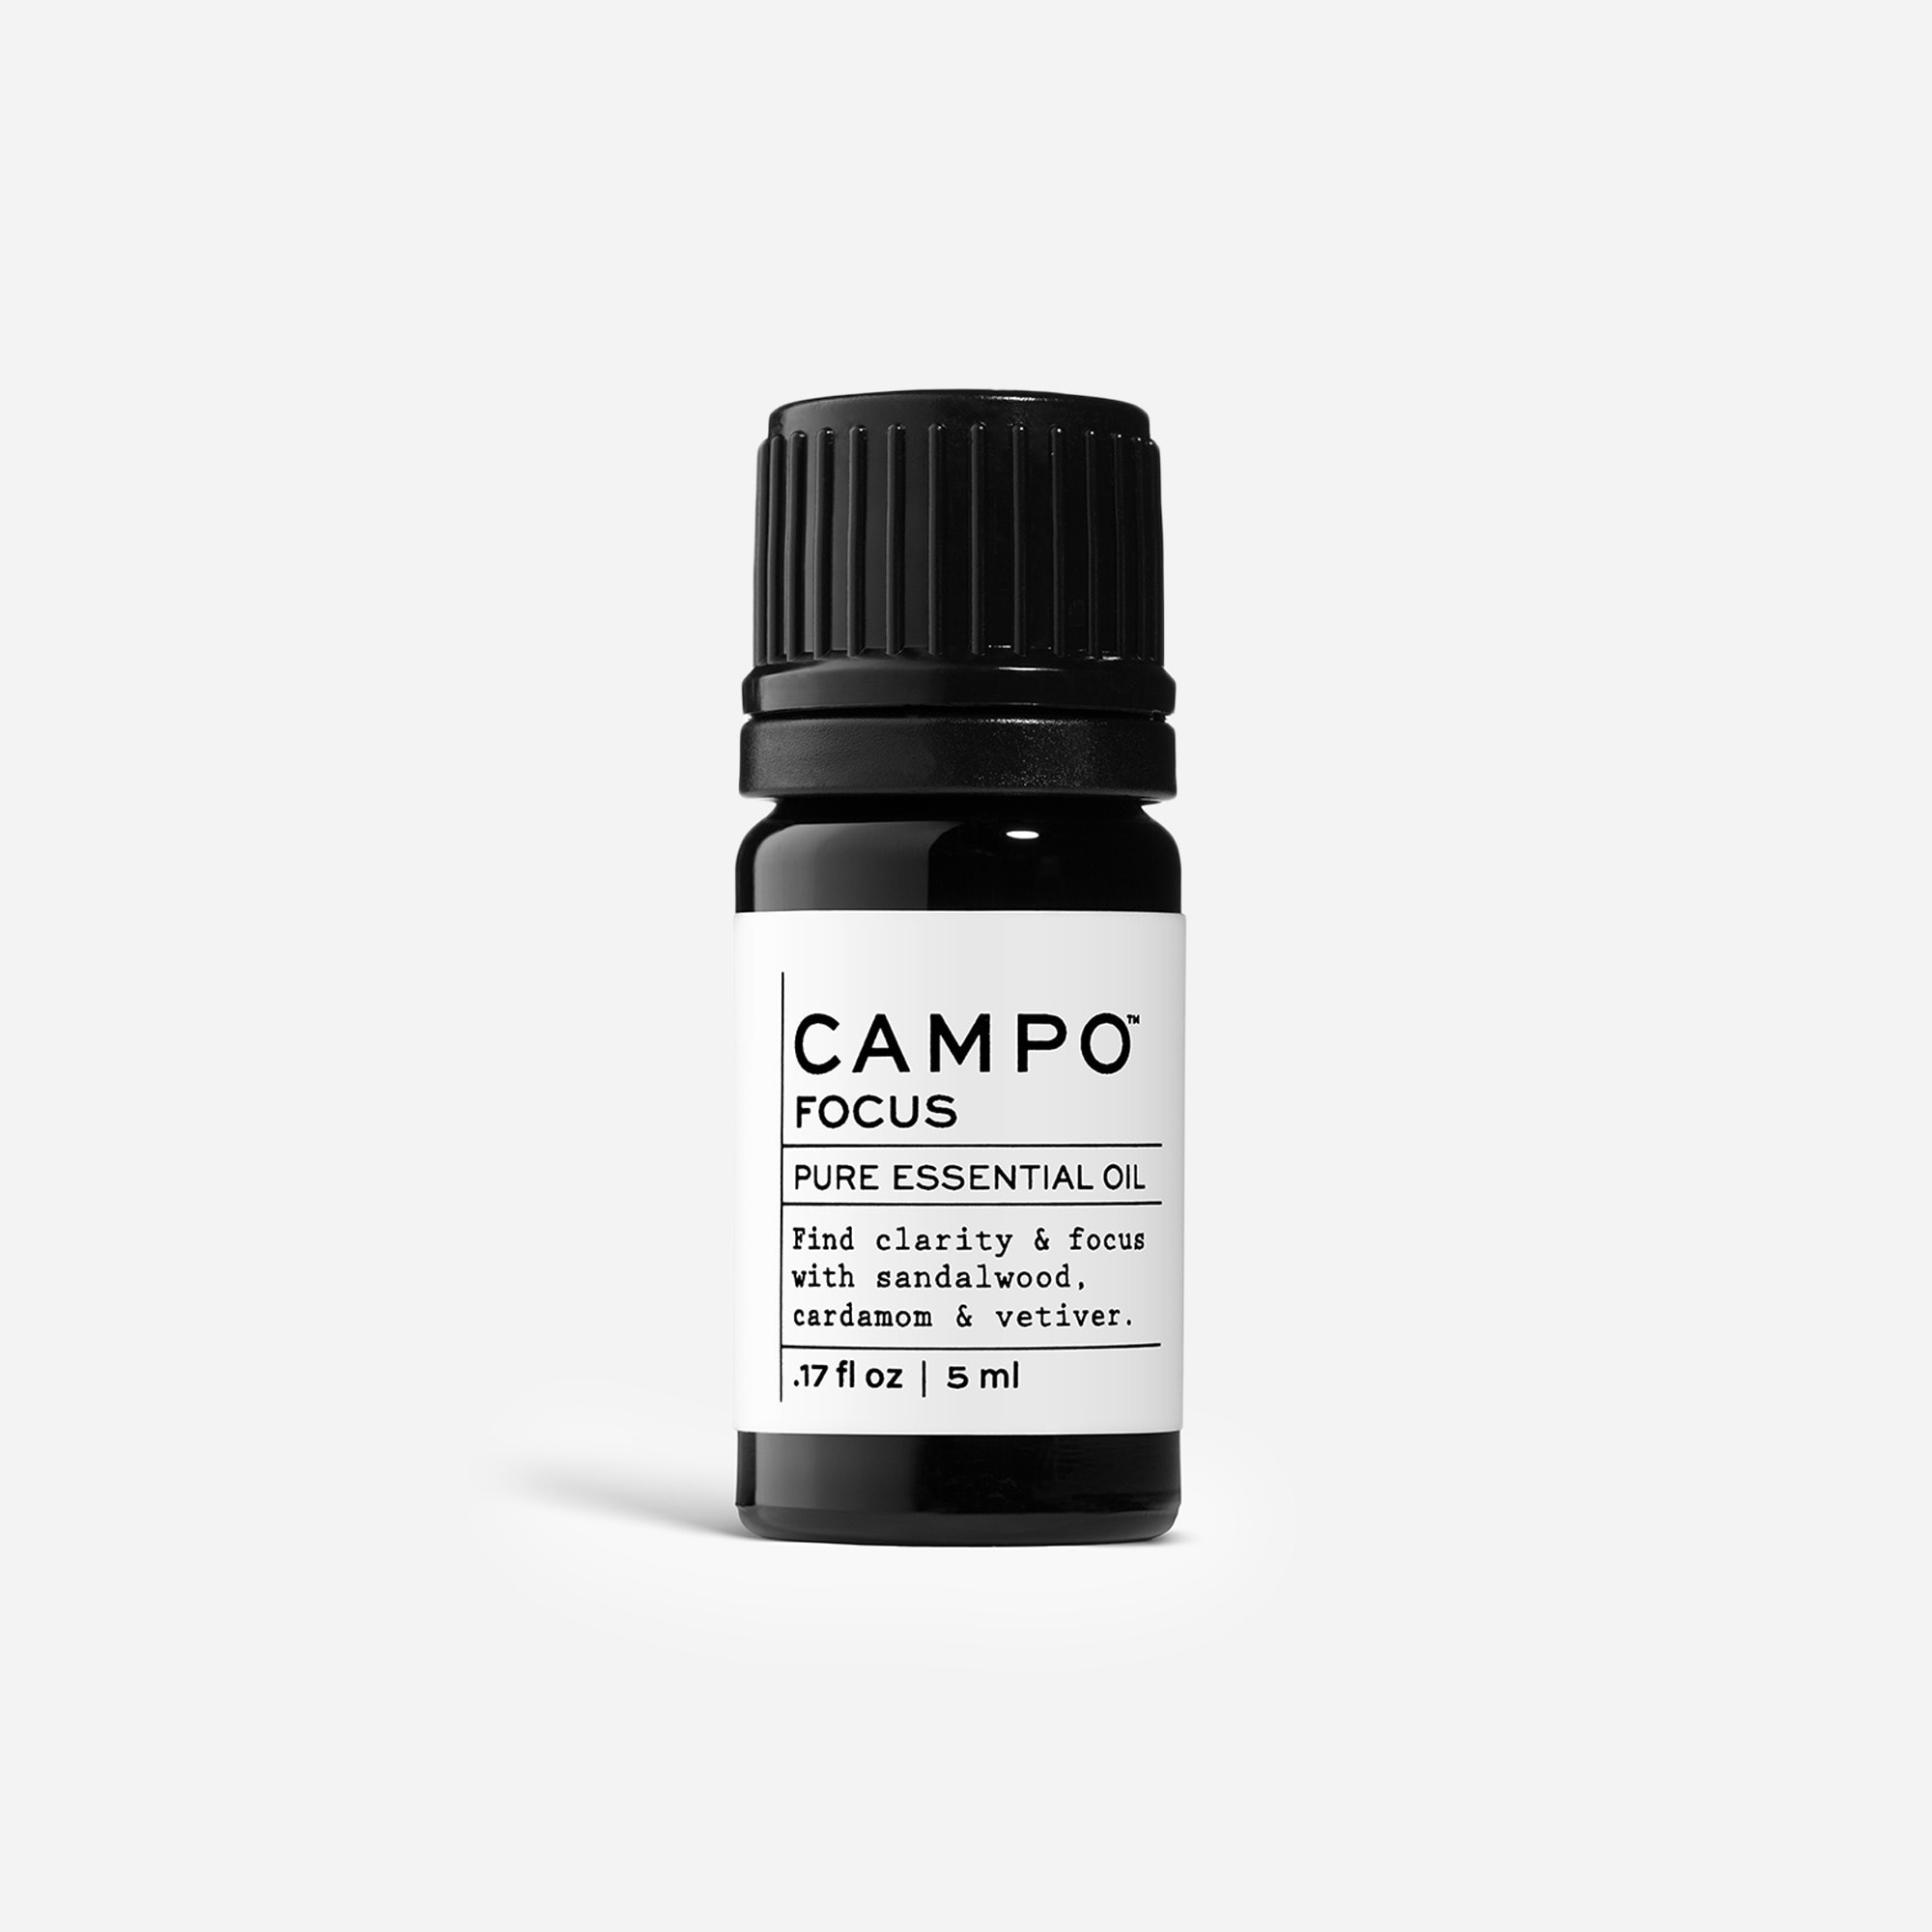 Jcrew CAMPO FOCUS pure essential oil blend